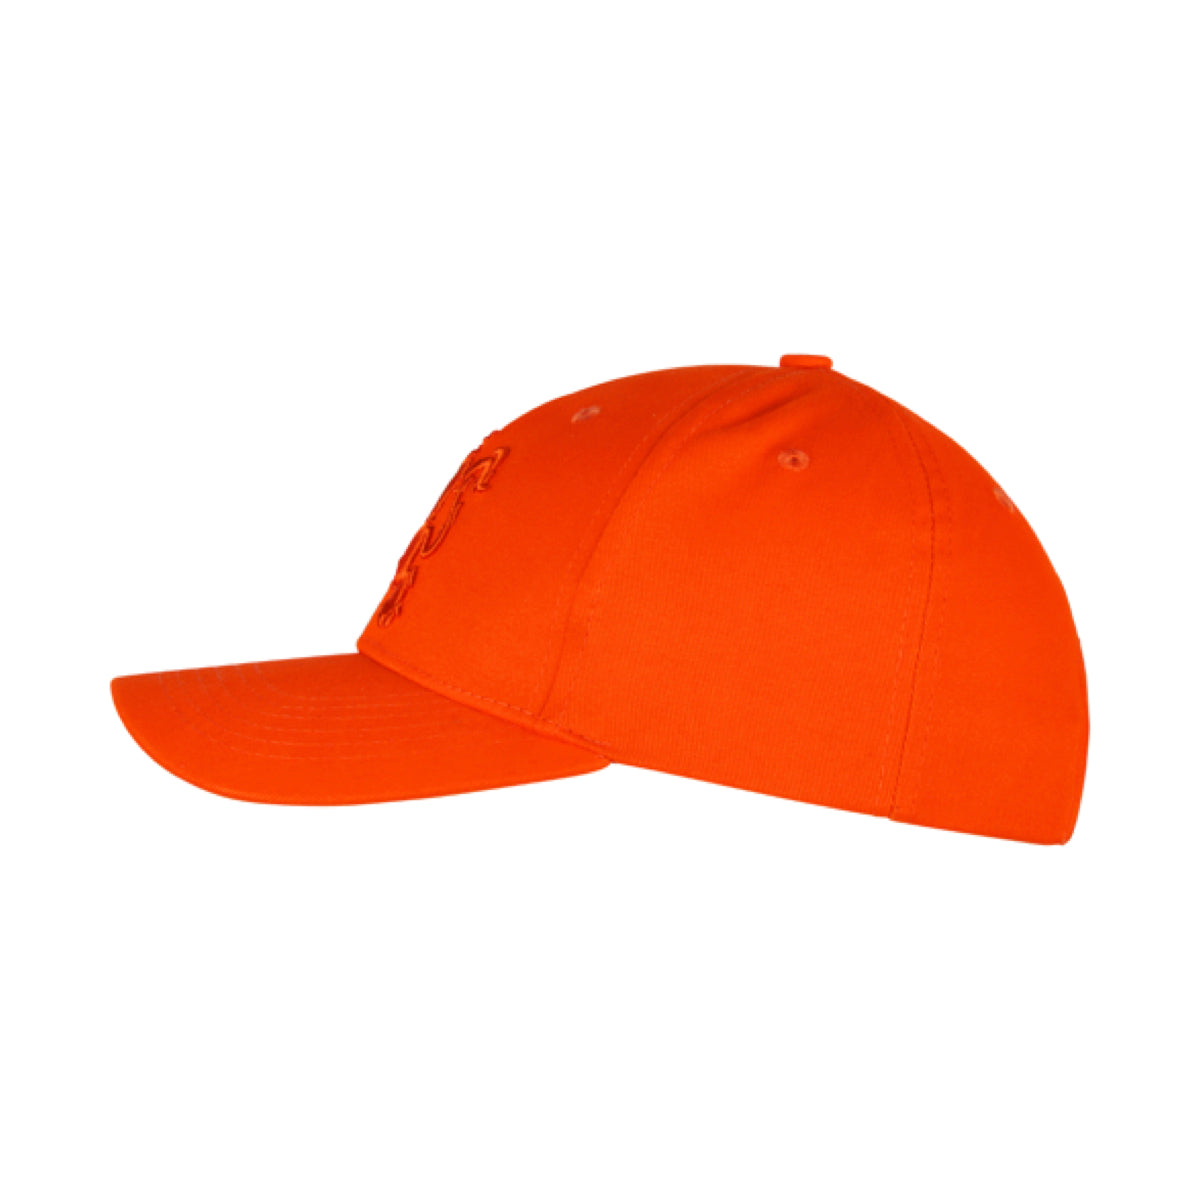 COMBIDEAL O.Leo baseballcap Oranje & MyTech Earbuds